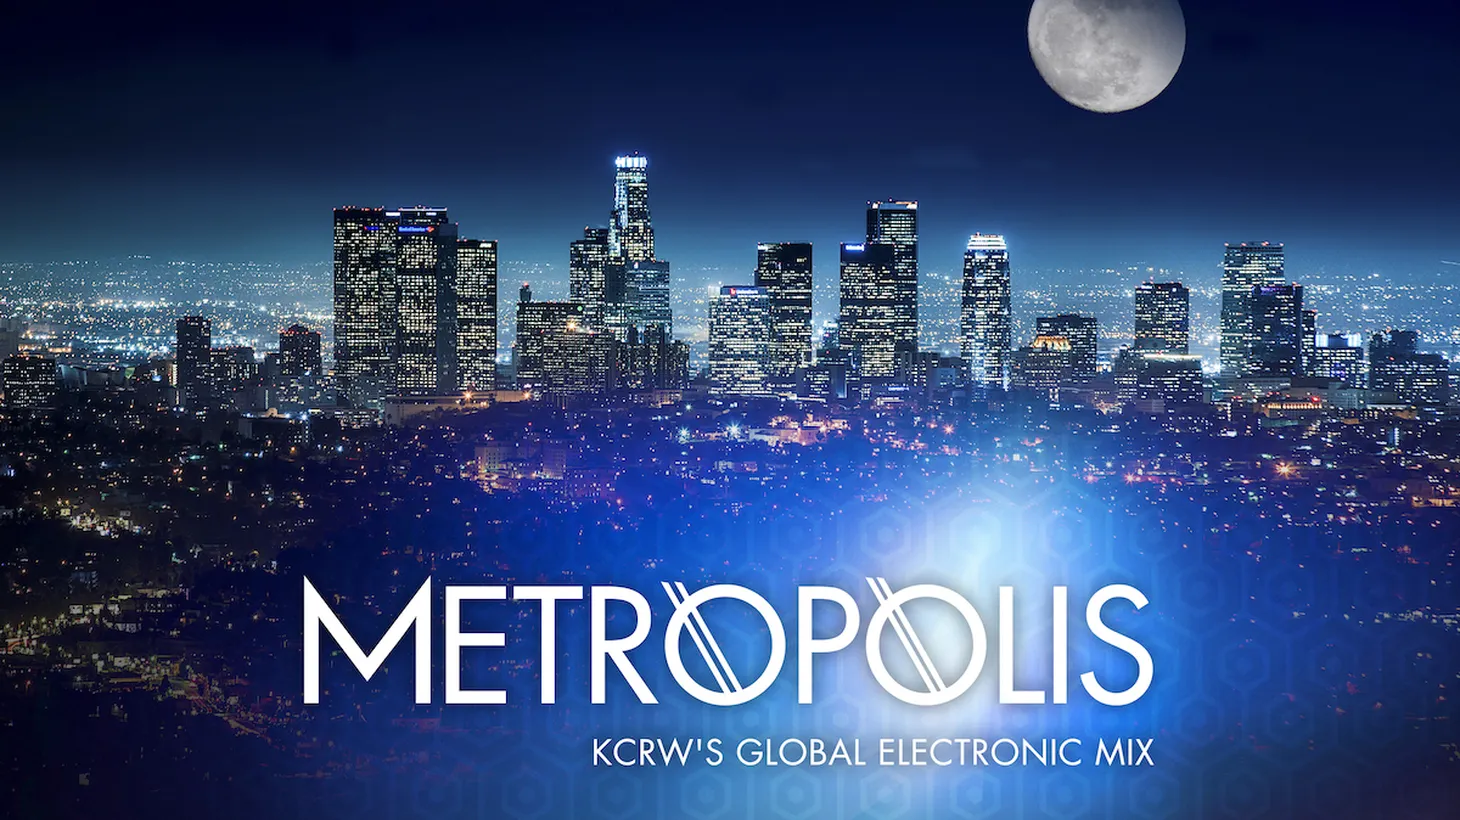 Metropolis playlist February 4, 2023.